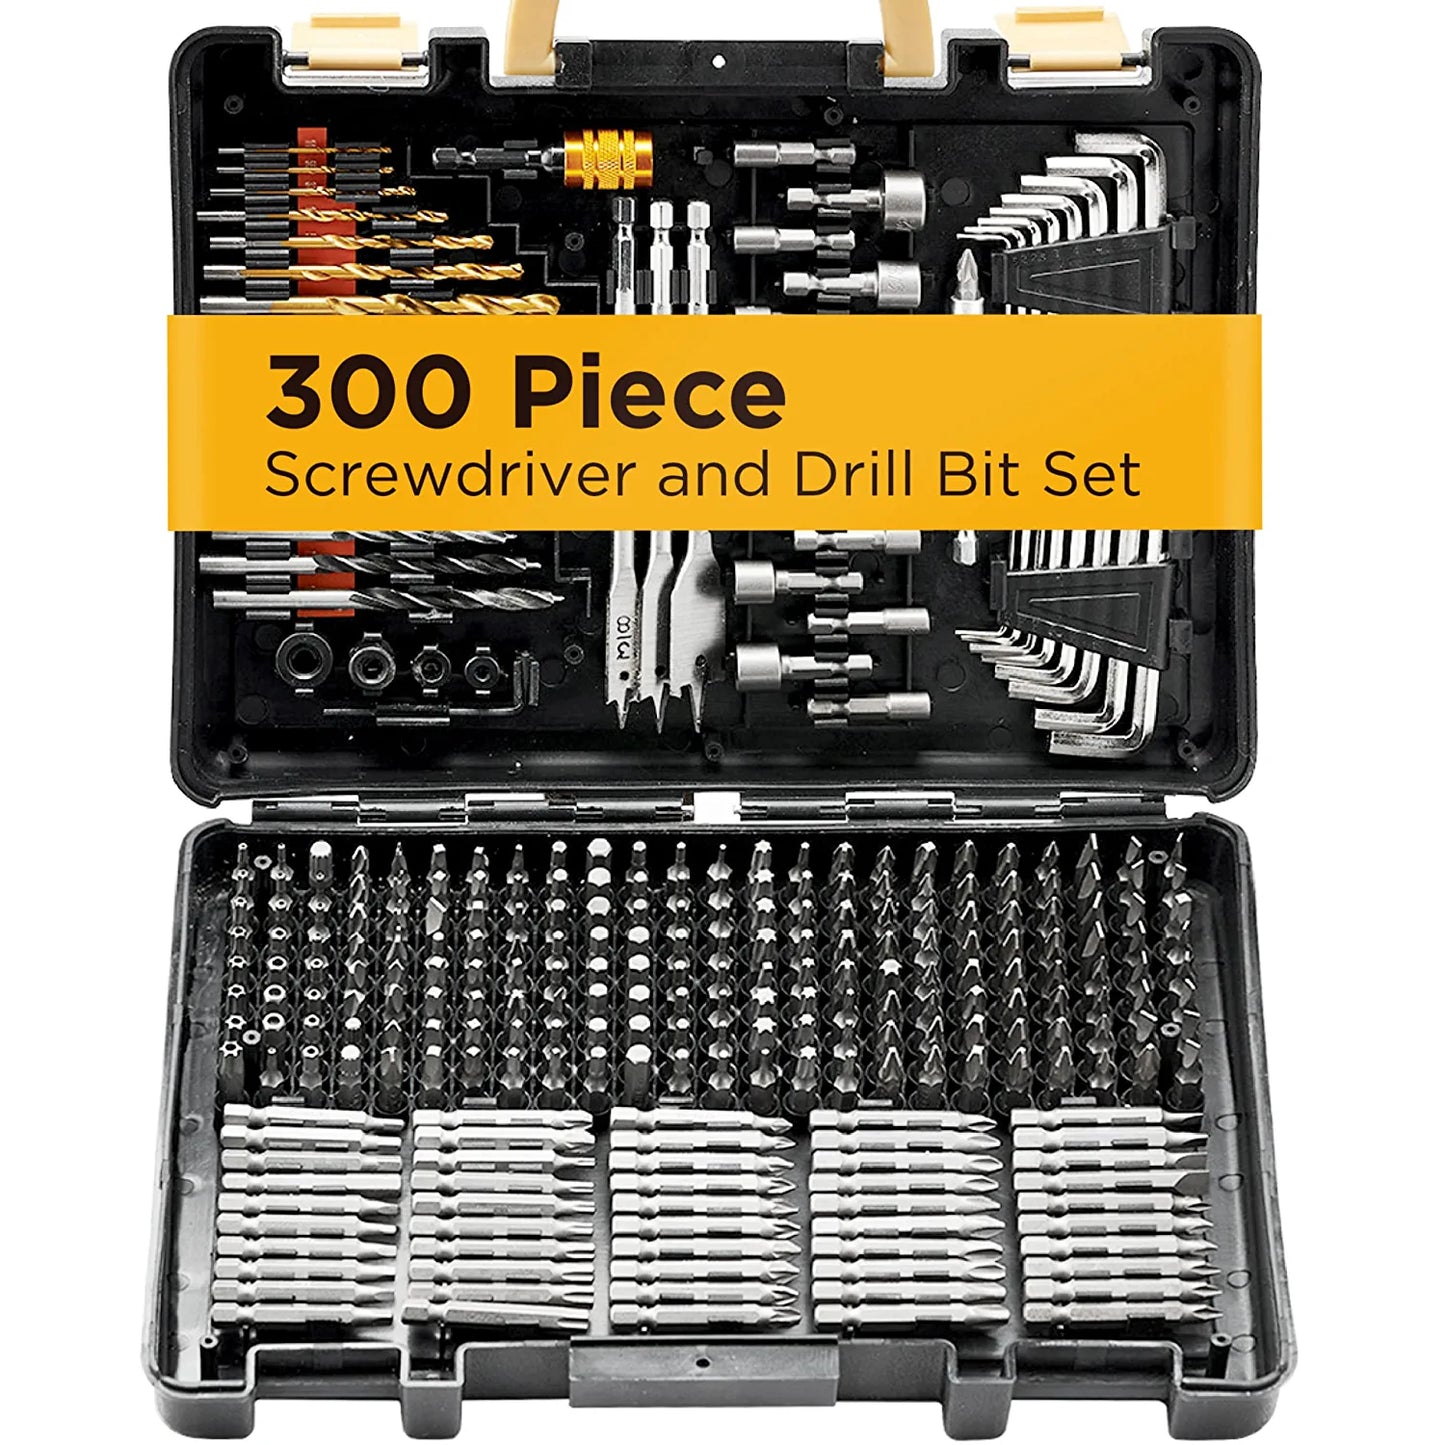 300 Piece Ultimate Screwdriver & Drill Bit Combination Set - High Grade Carbon Steel